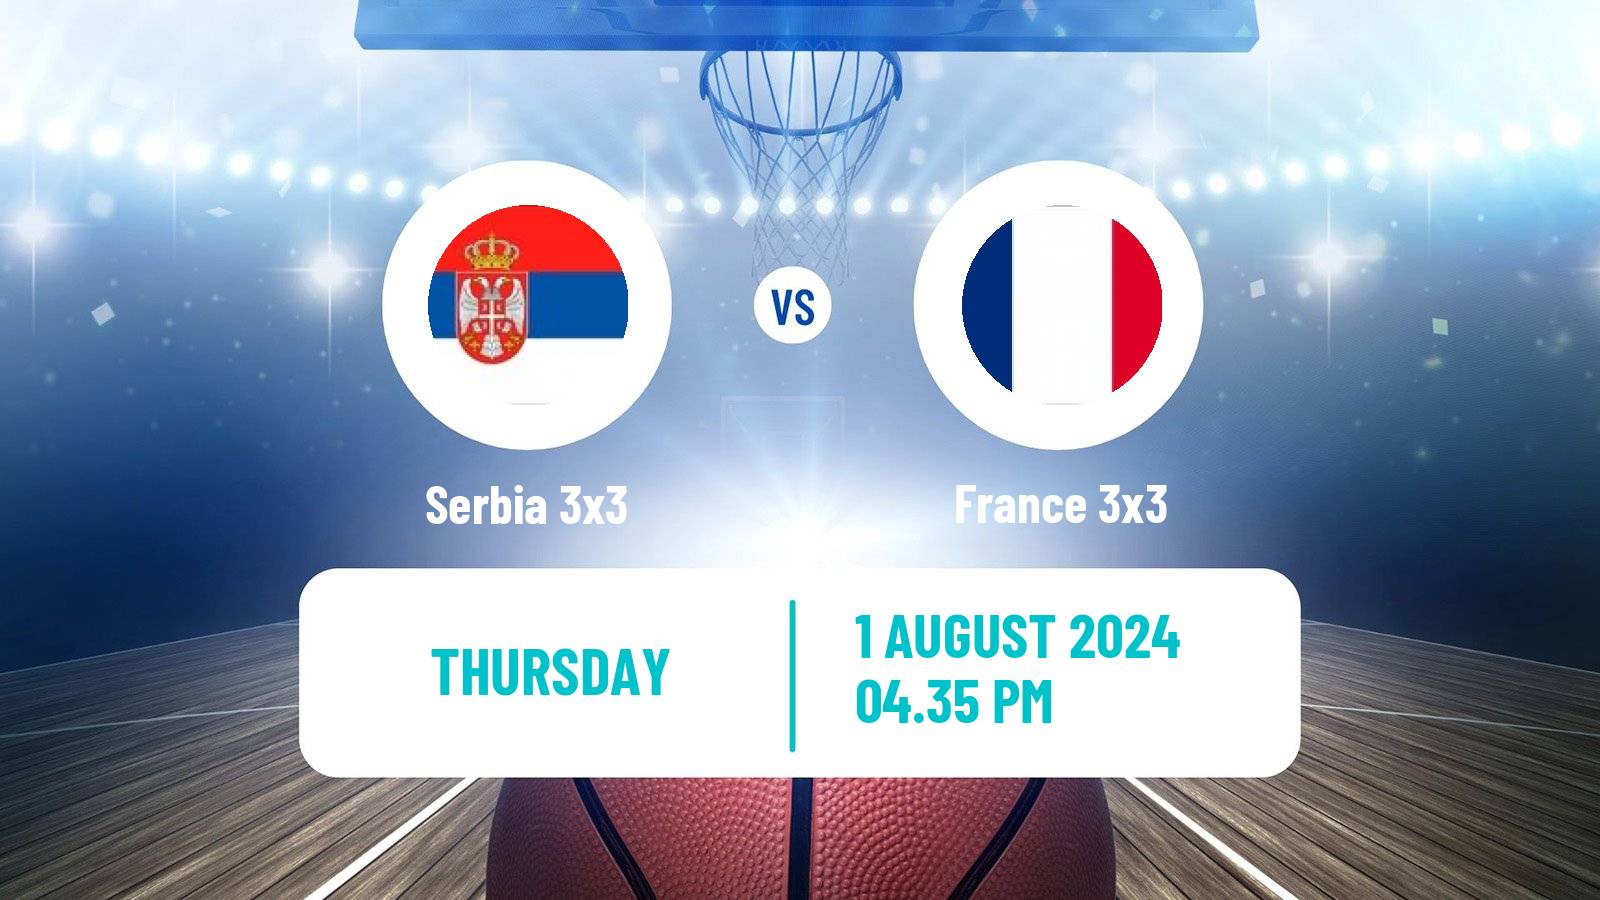 Basketball Olympic Games Basketball 3x3 Serbia 3x3 - France 3x3